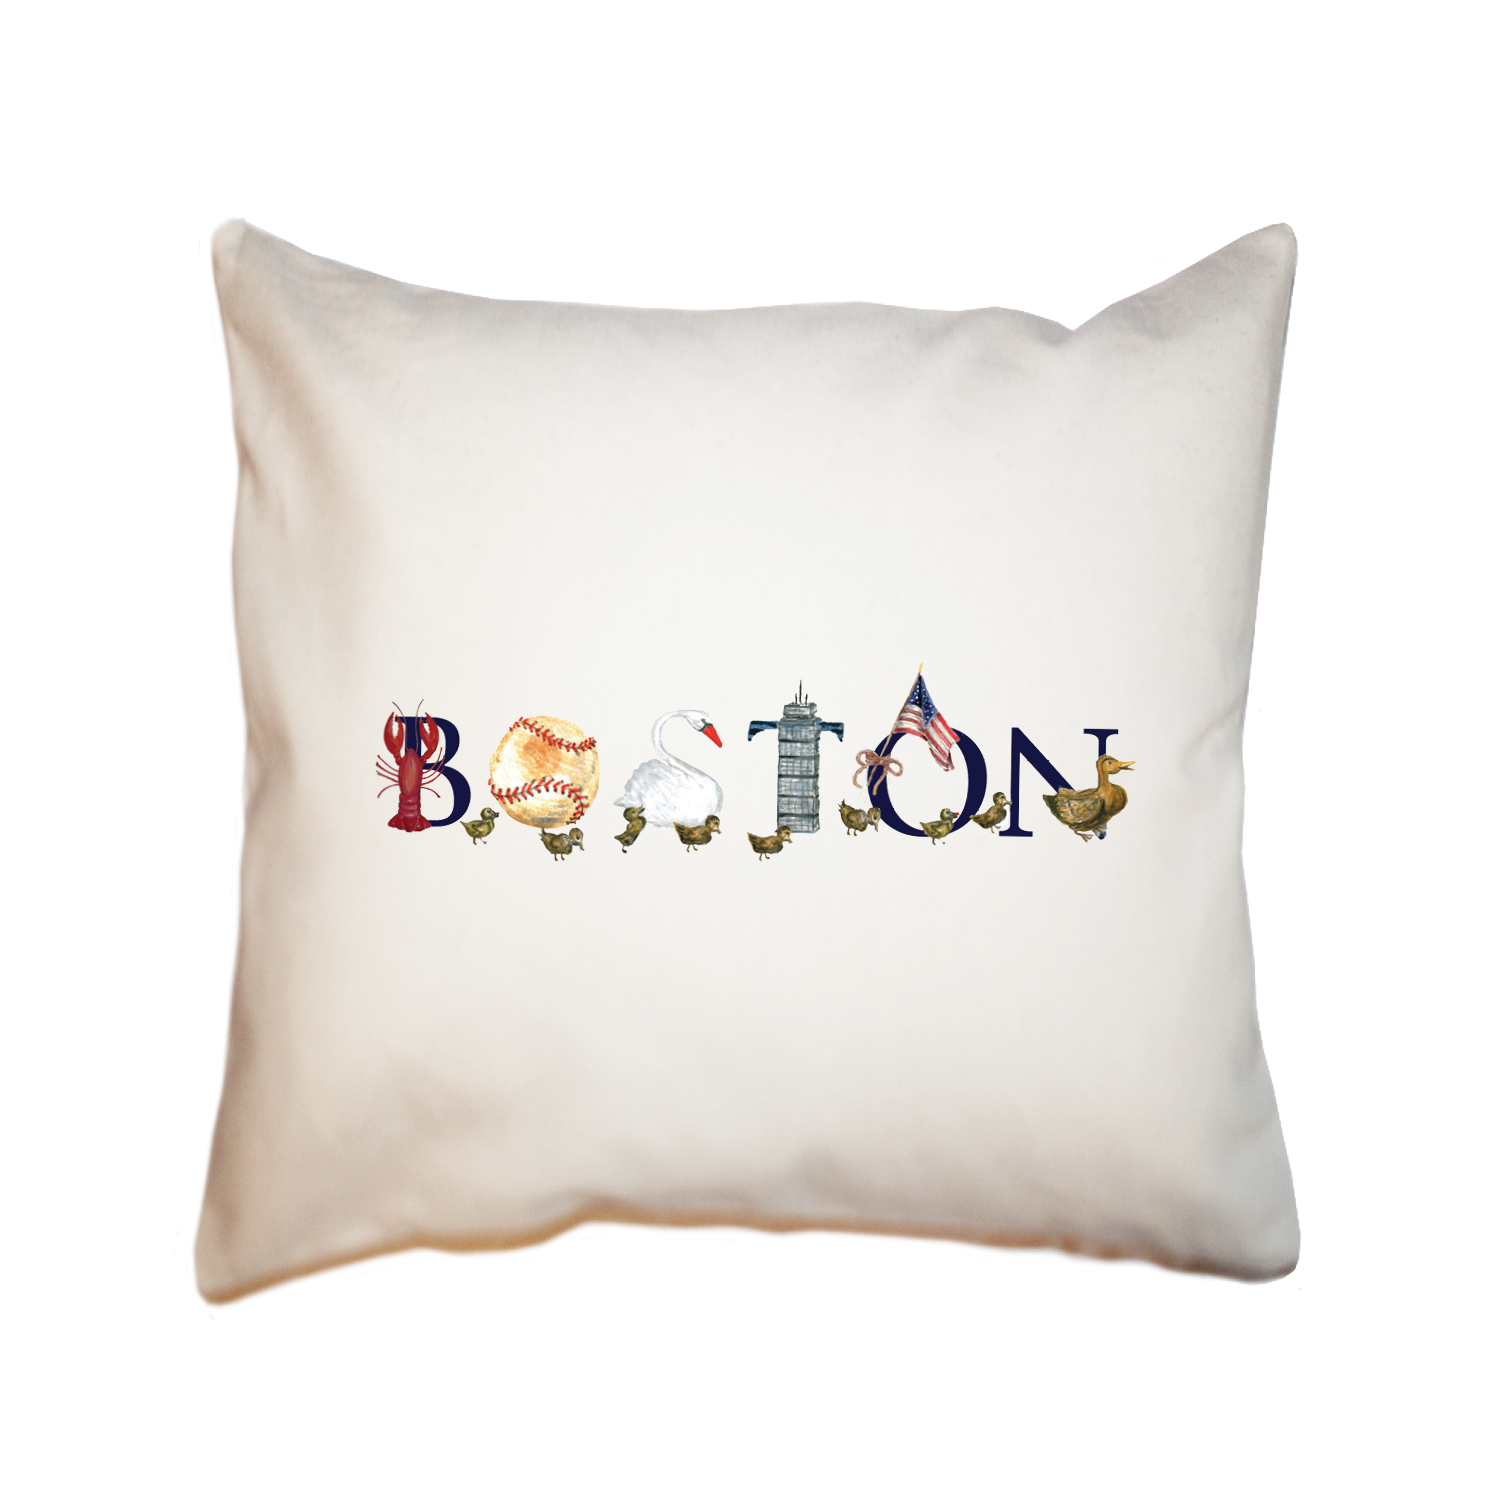 boston square pillow